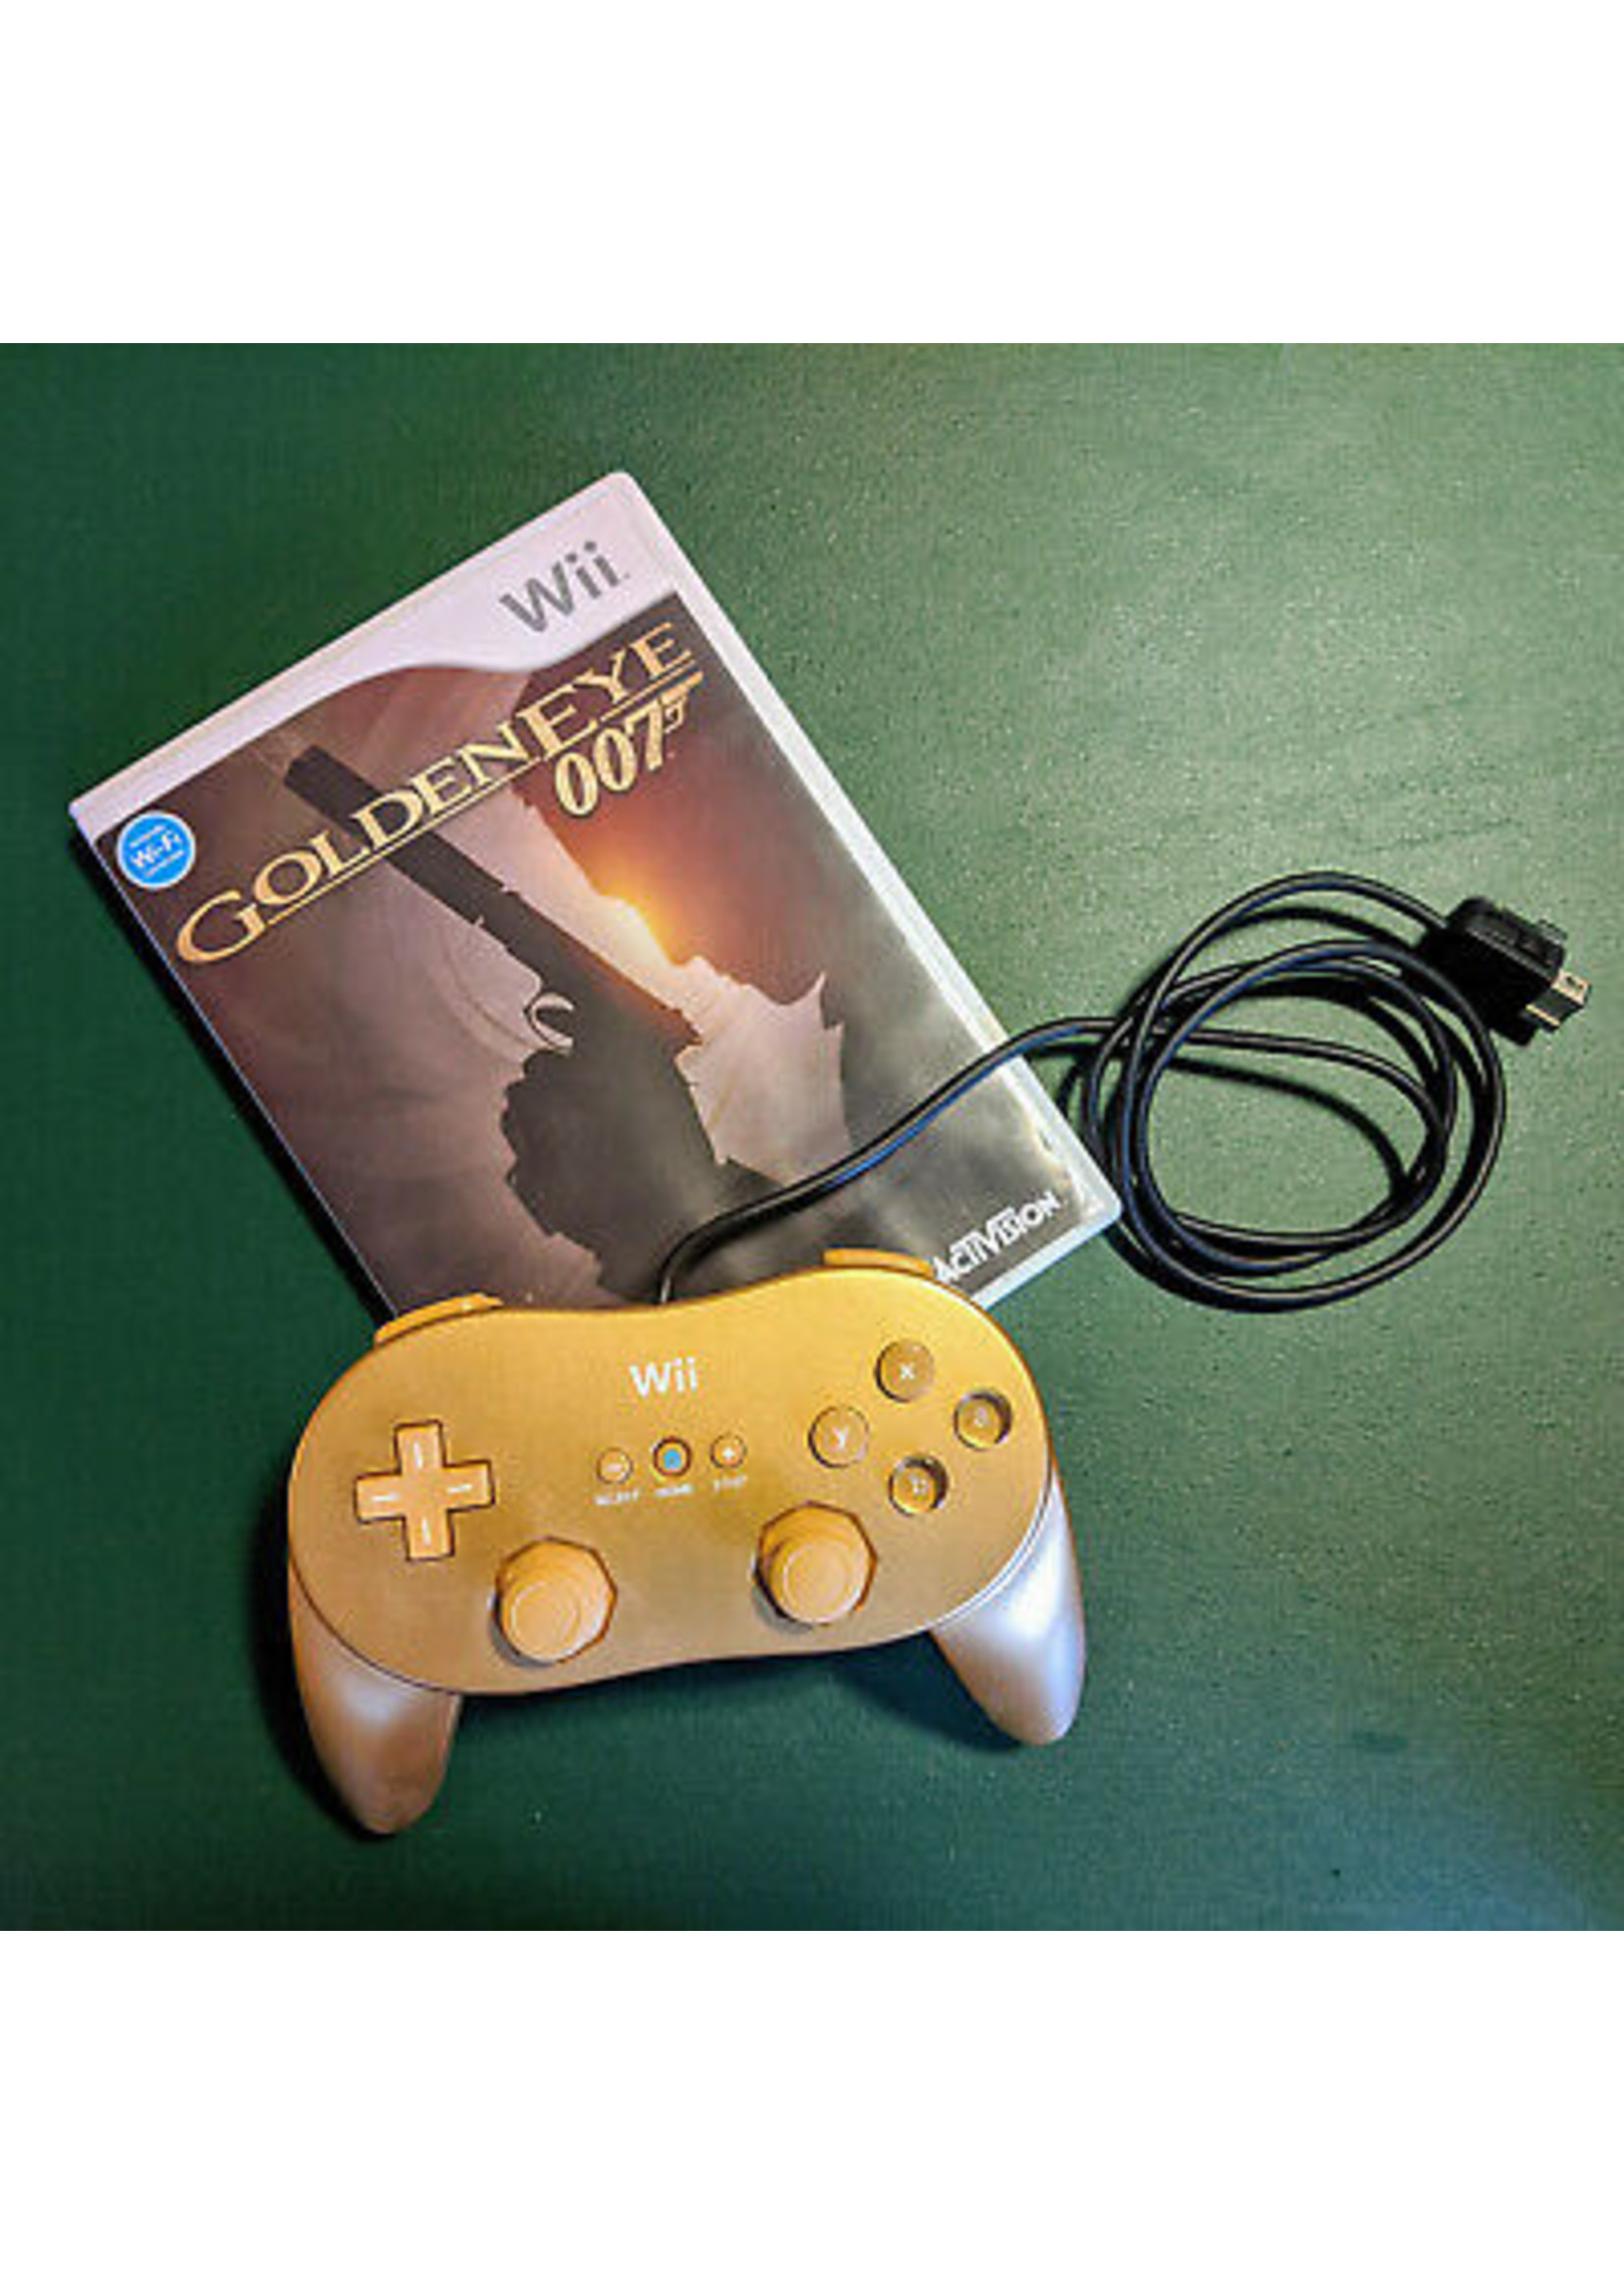 Goldeneye 007 game + Golden Wii Controller